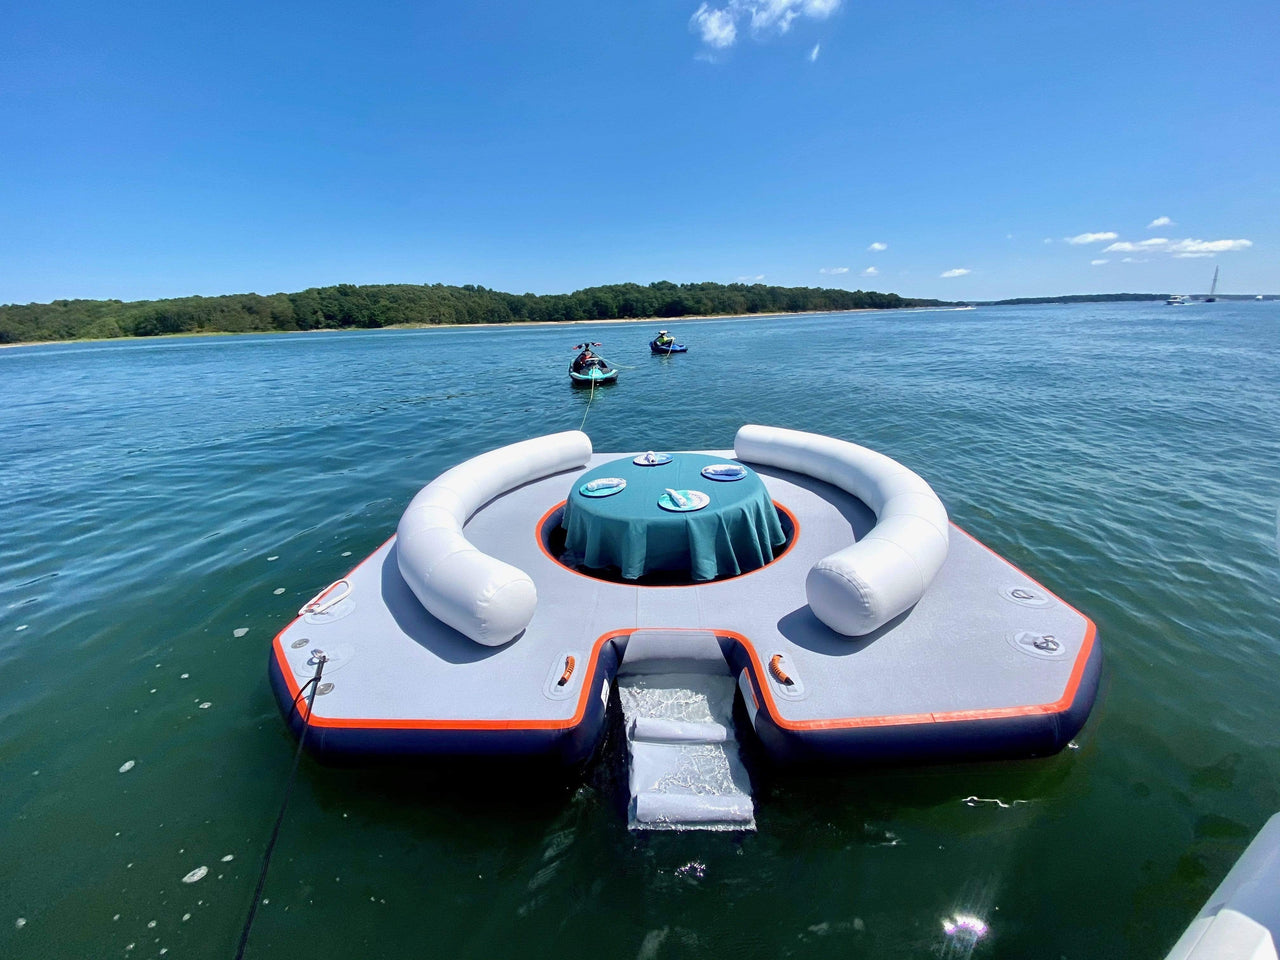 AquaBanas Floating Party Dock Island Inflatable Platform with Bana Tent - Good Wave